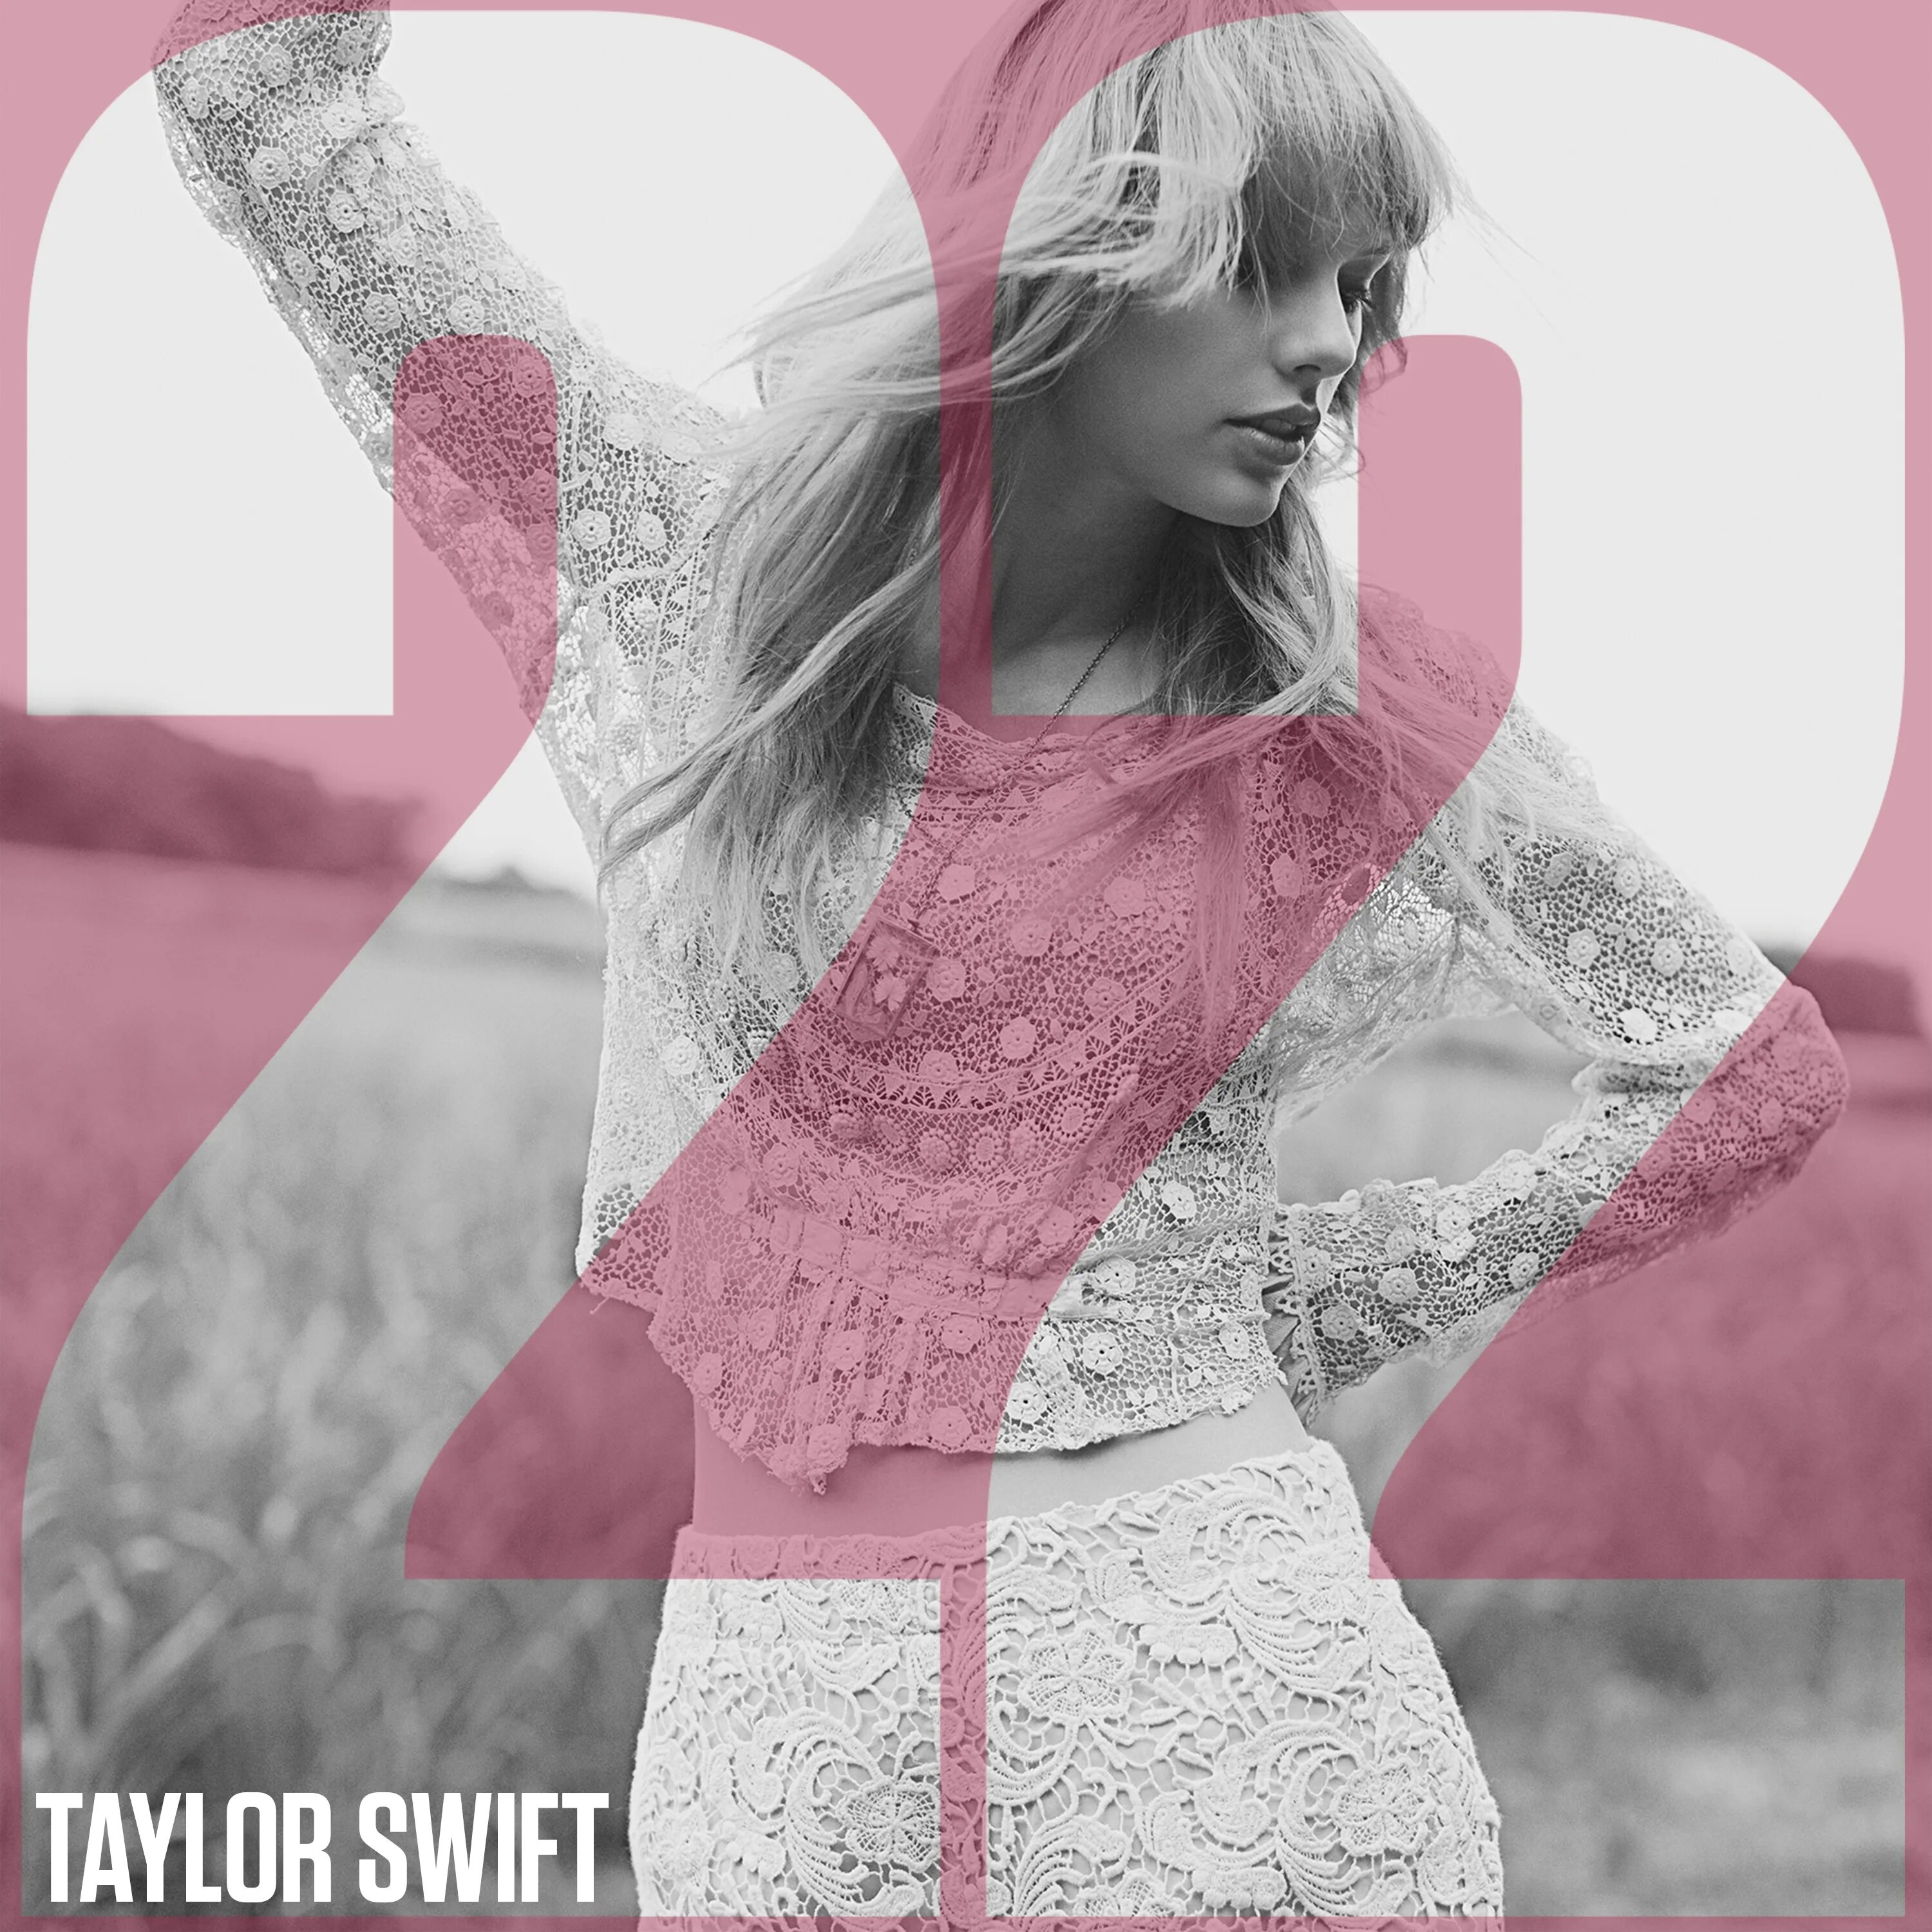 Singles 22. Taylor Swift 22 обложка. Тейлор Свифт (1989) исполнительница Кантри. Тейлор Свифт 22 клип. Taylor Swift - is it over Now обложка.